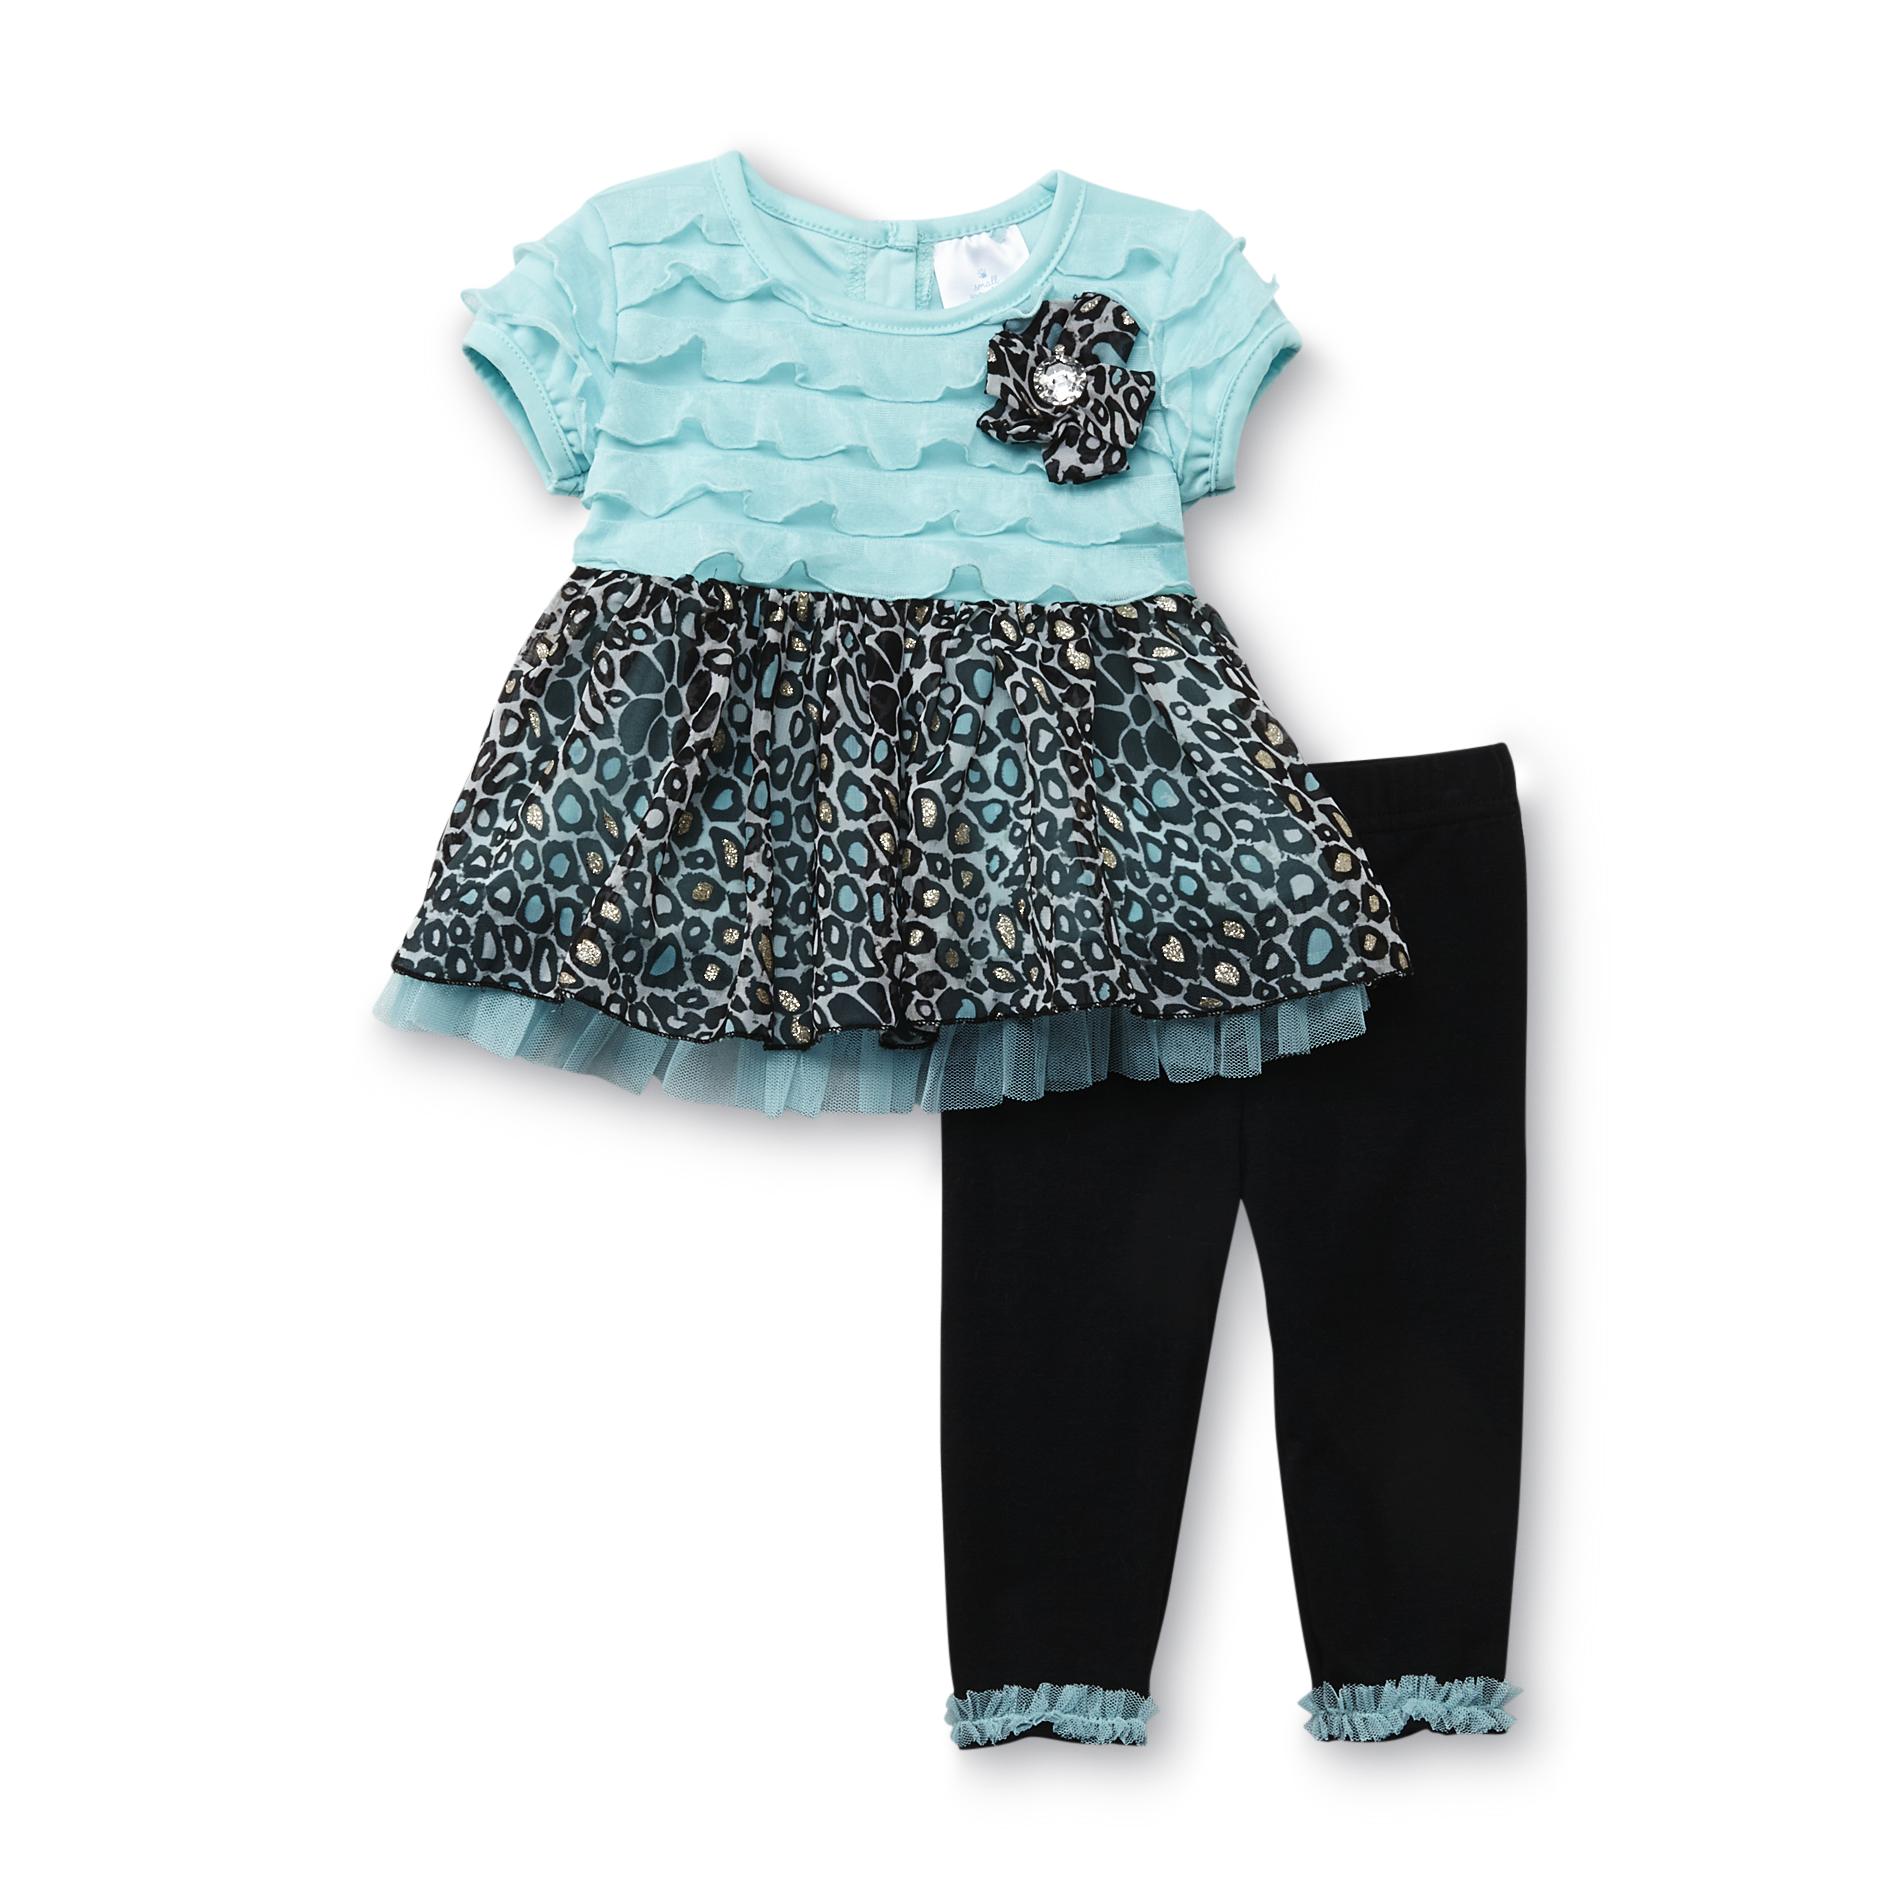 Small Wonders Newborn Girl's Dress & Leggings - Leopard Print